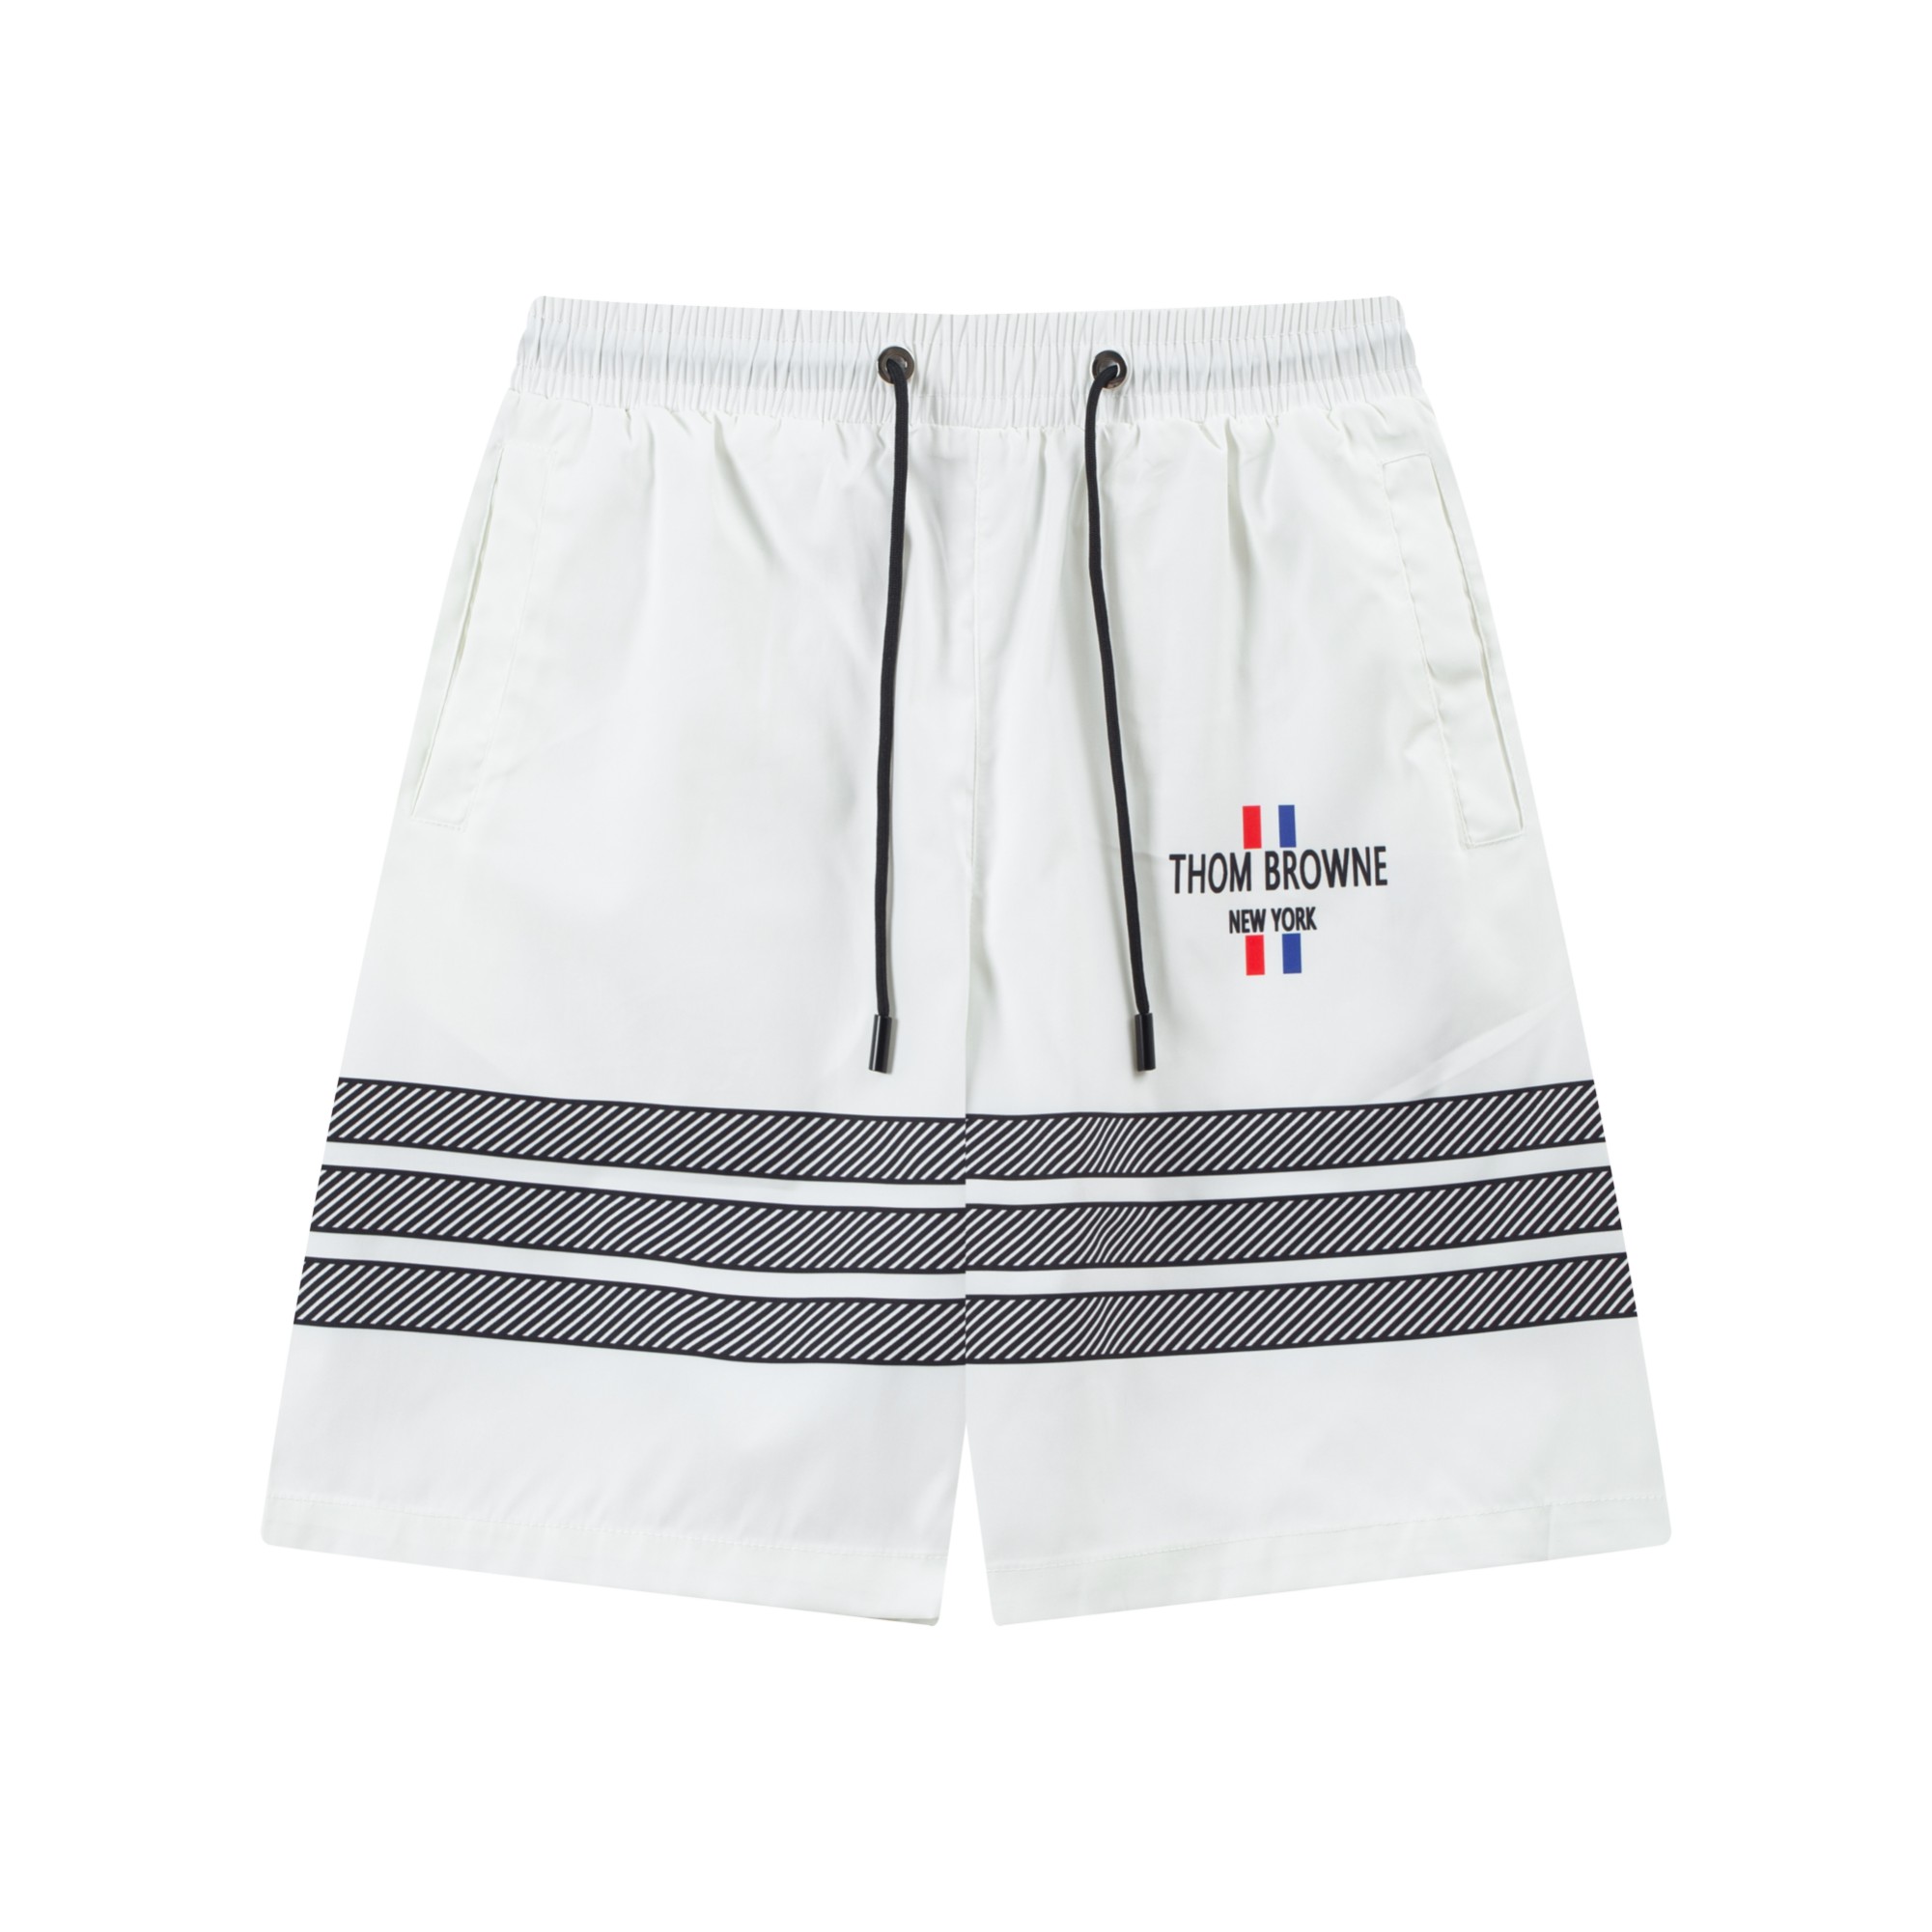 Thom Browne Clothing Shorts Black Brown White Beach